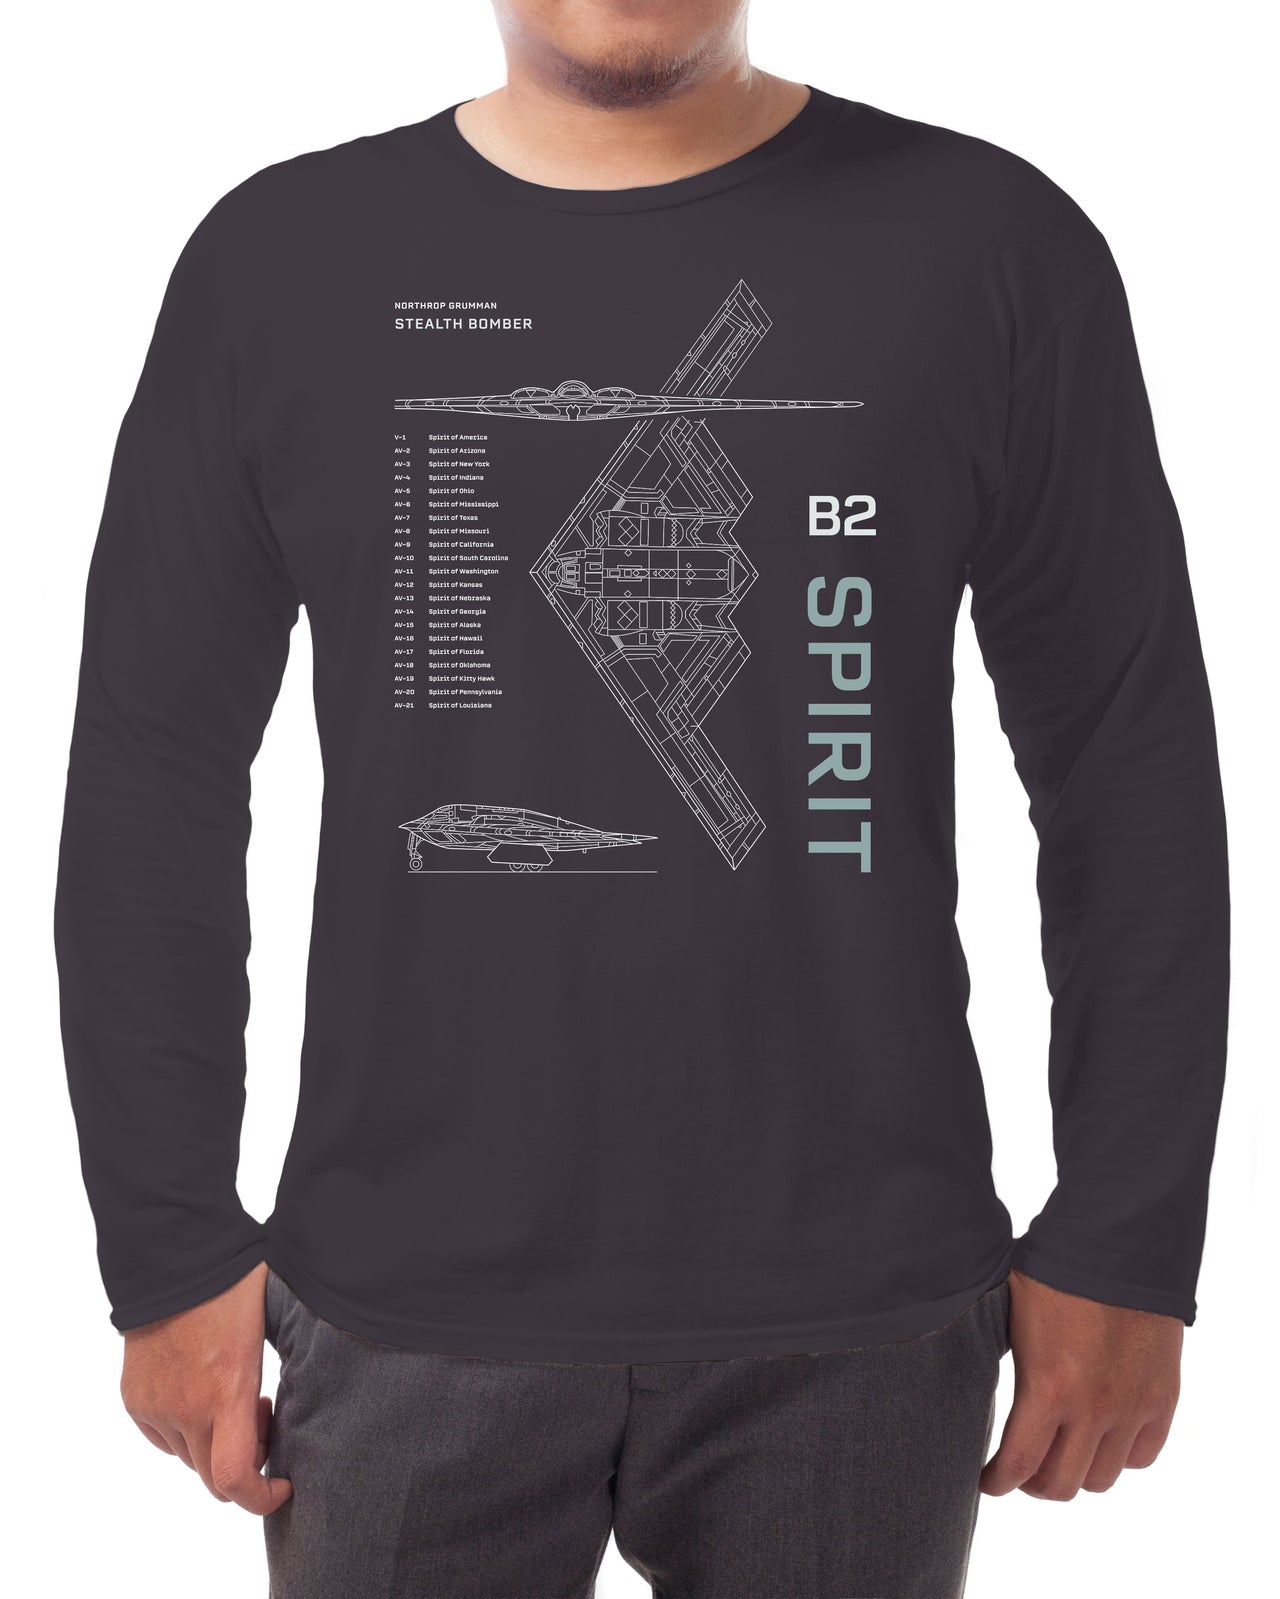 B-2 Spirit - Long-sleeve T-shirt